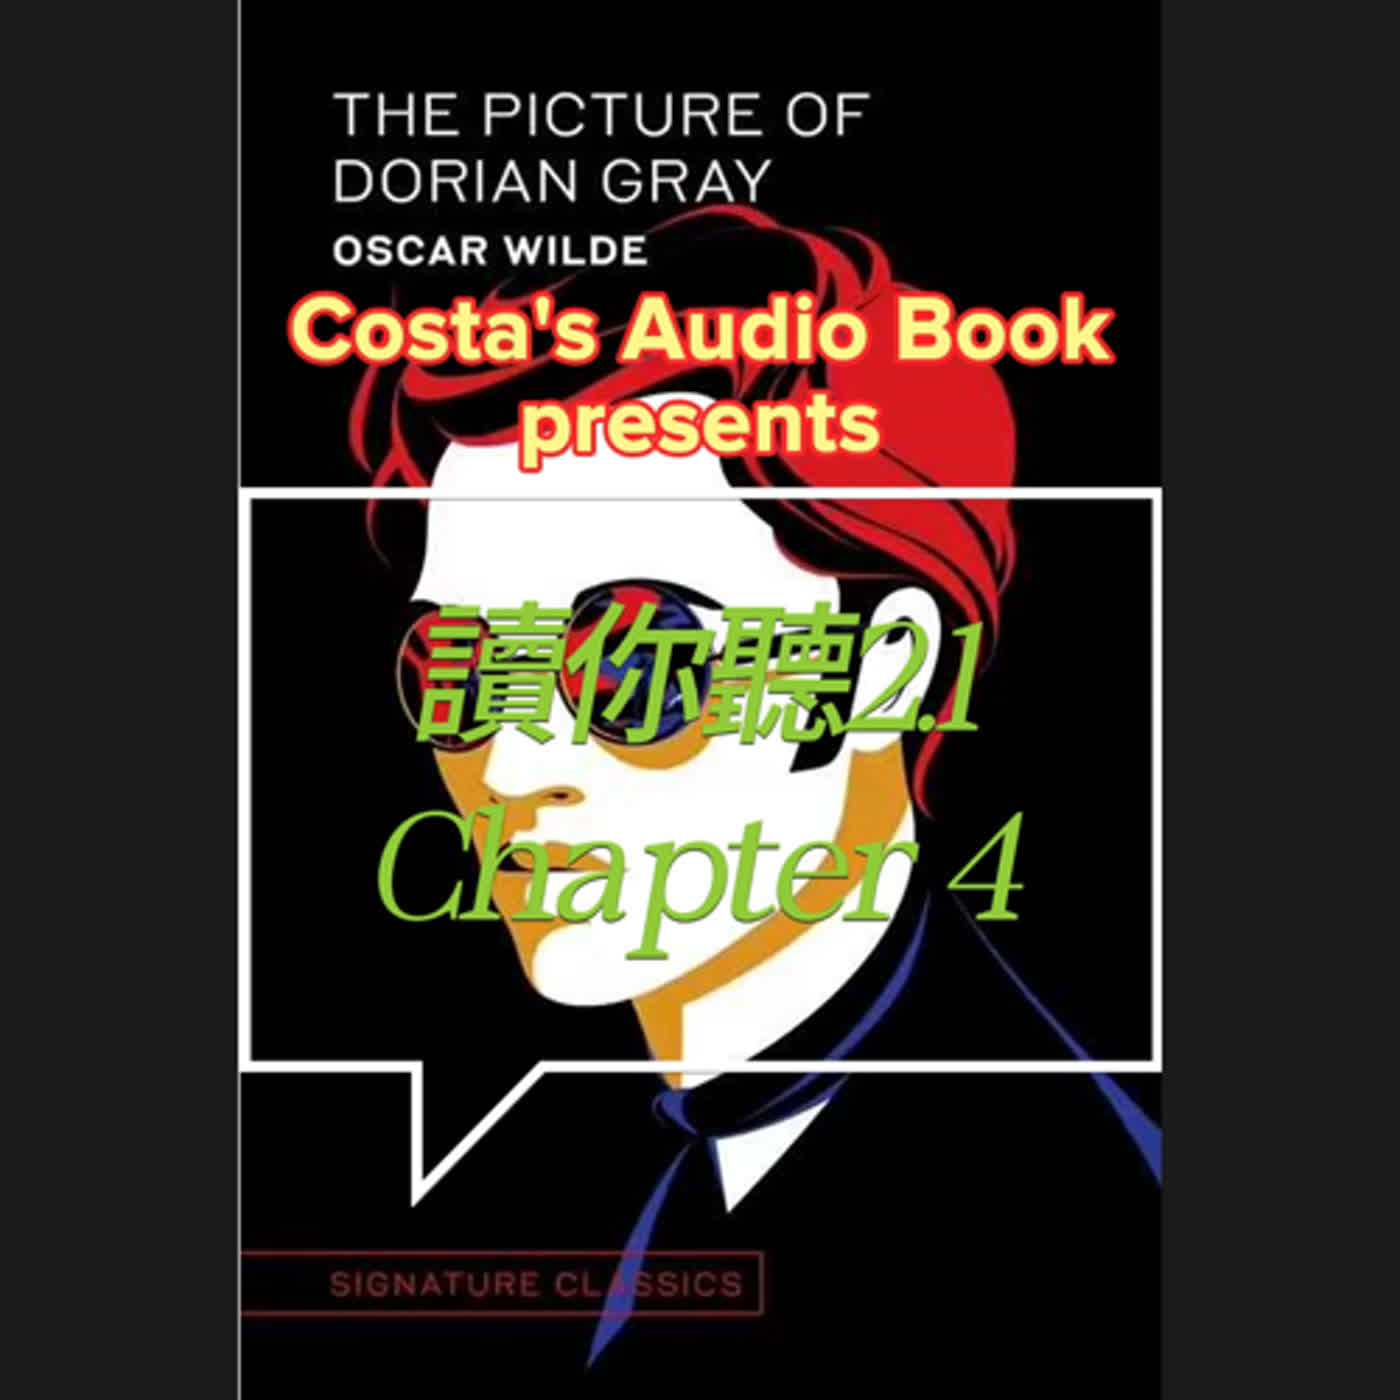 Costa's Audio Book: Oscar Wilde "The Picture of Dorian Gray" Chapter 4 讀你聽2.1《道林格雷的畫像》